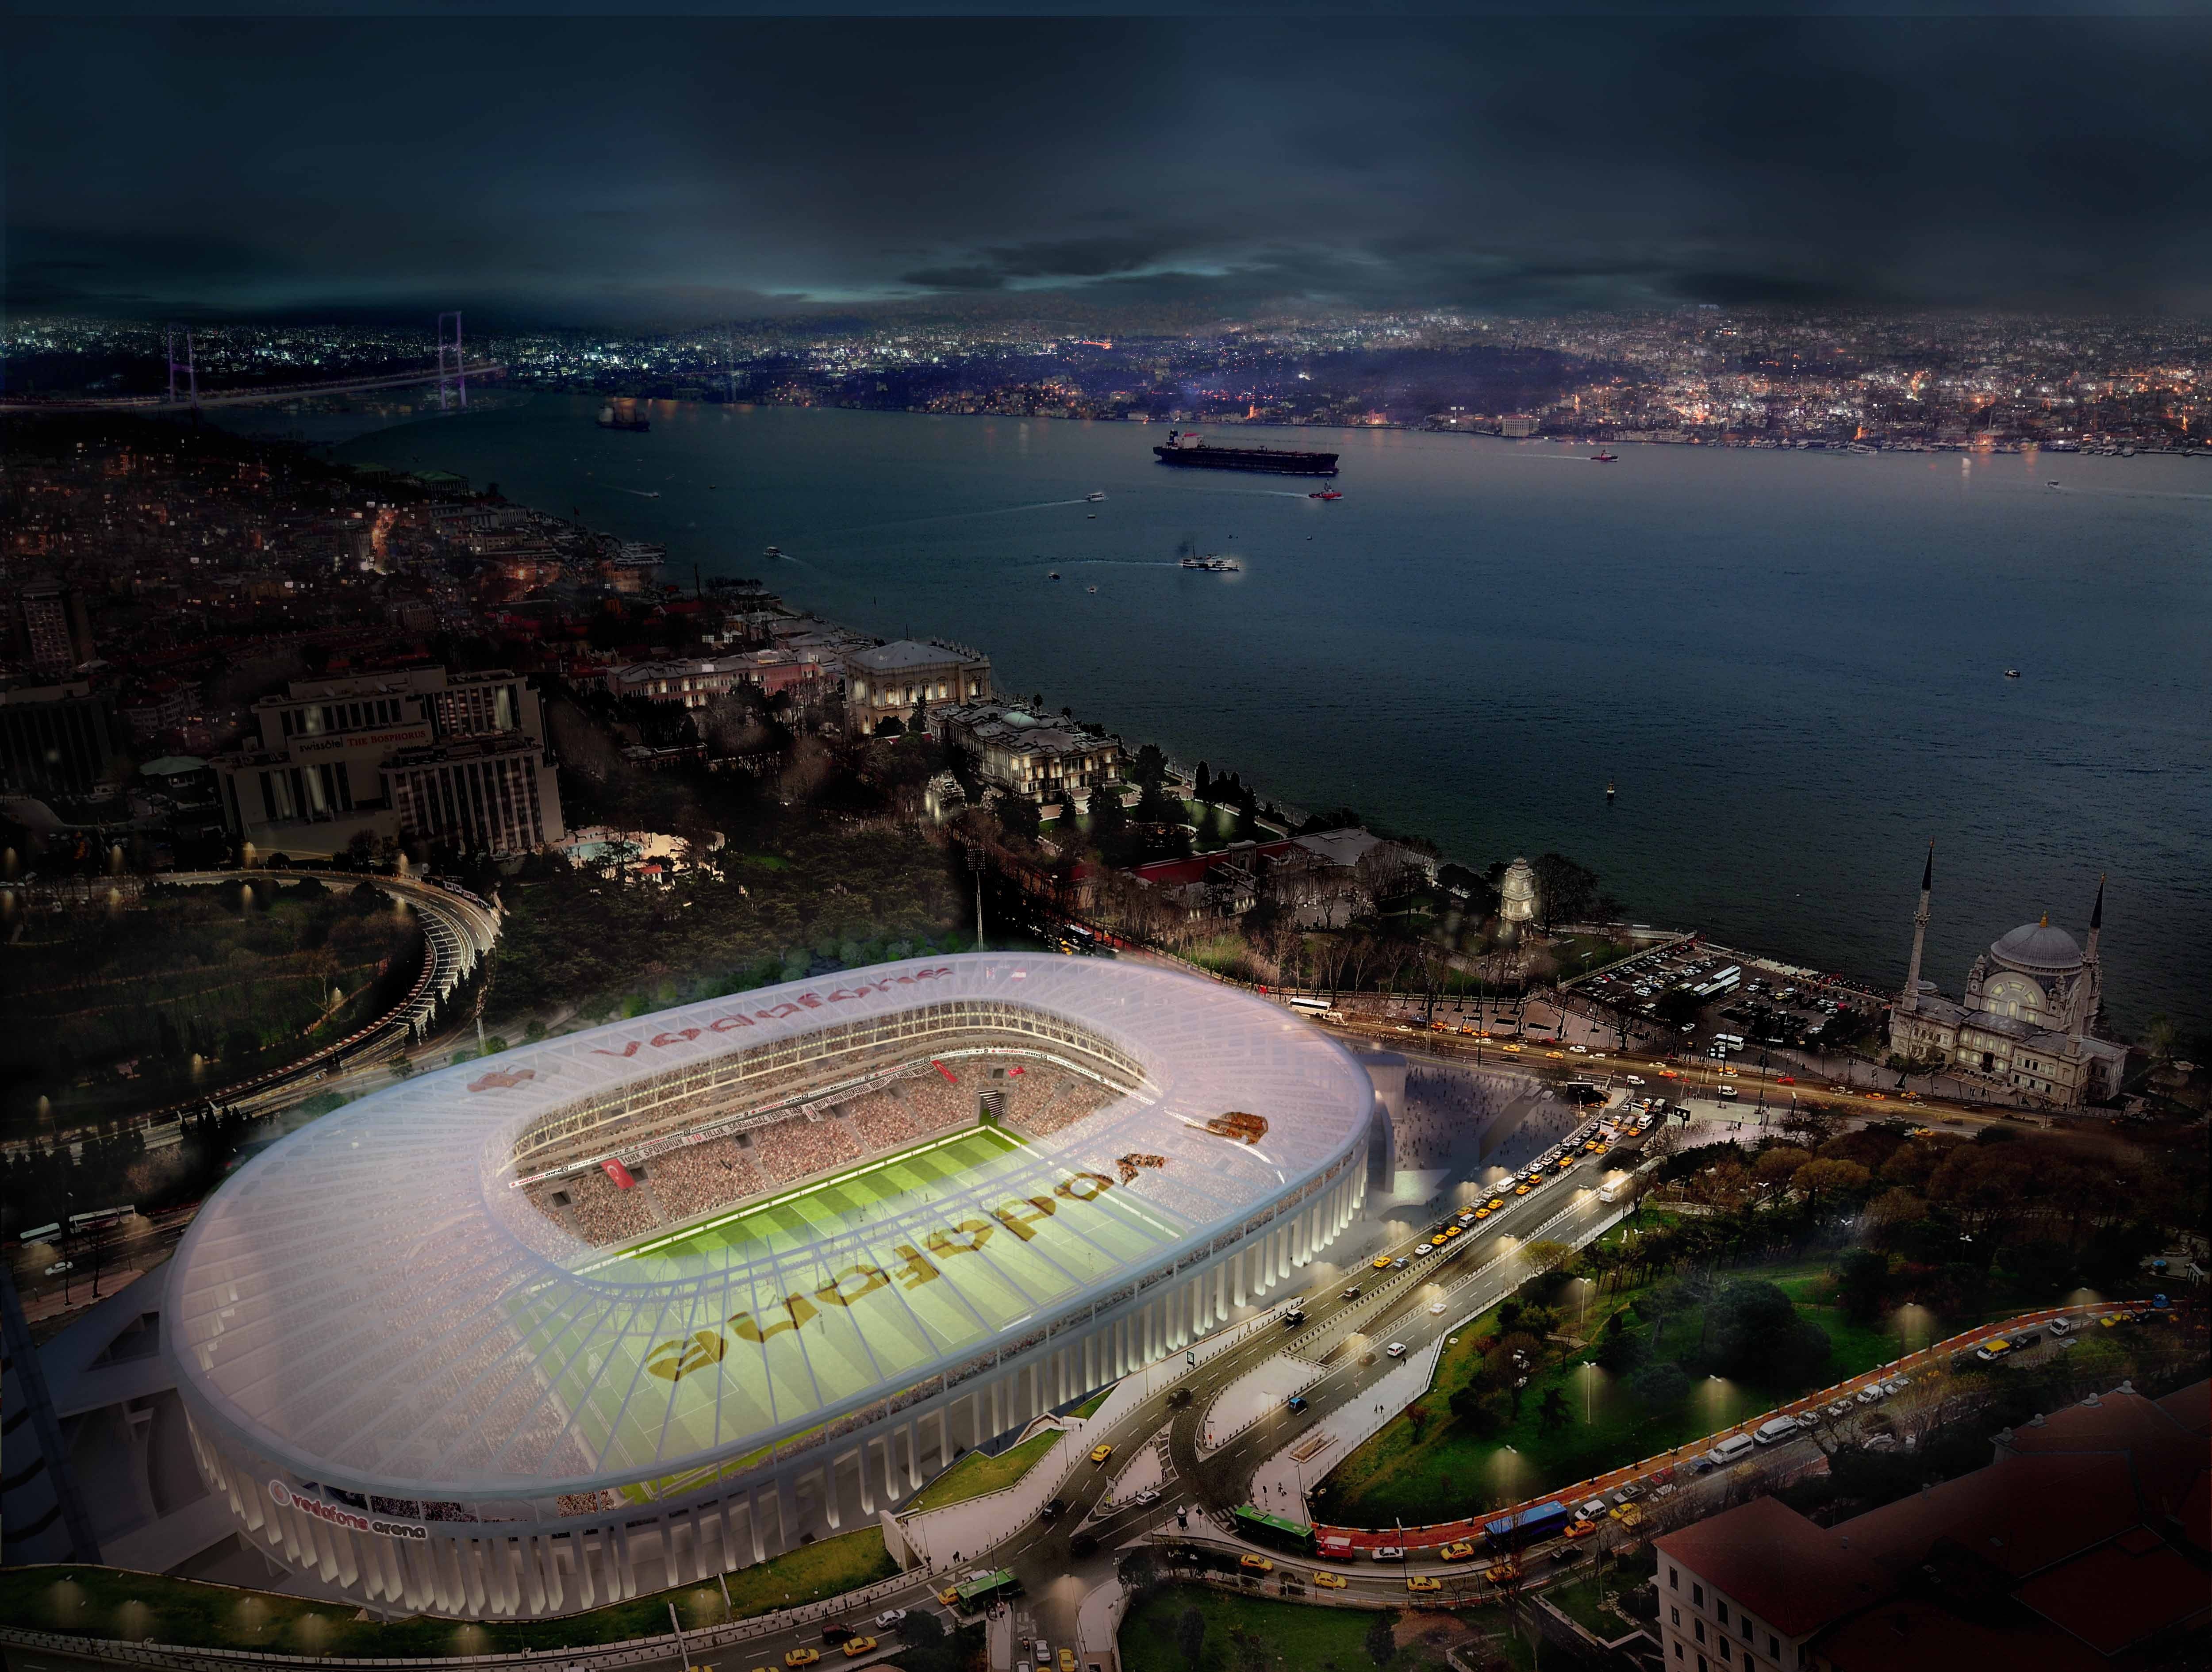 Besiktas J.K. #Istanbul #soccer Soccer Pitches Vodafone Arena K #wallpaper #hdwallpaper #desktop. New football stadiums, Vodafone arena, Football stadiums